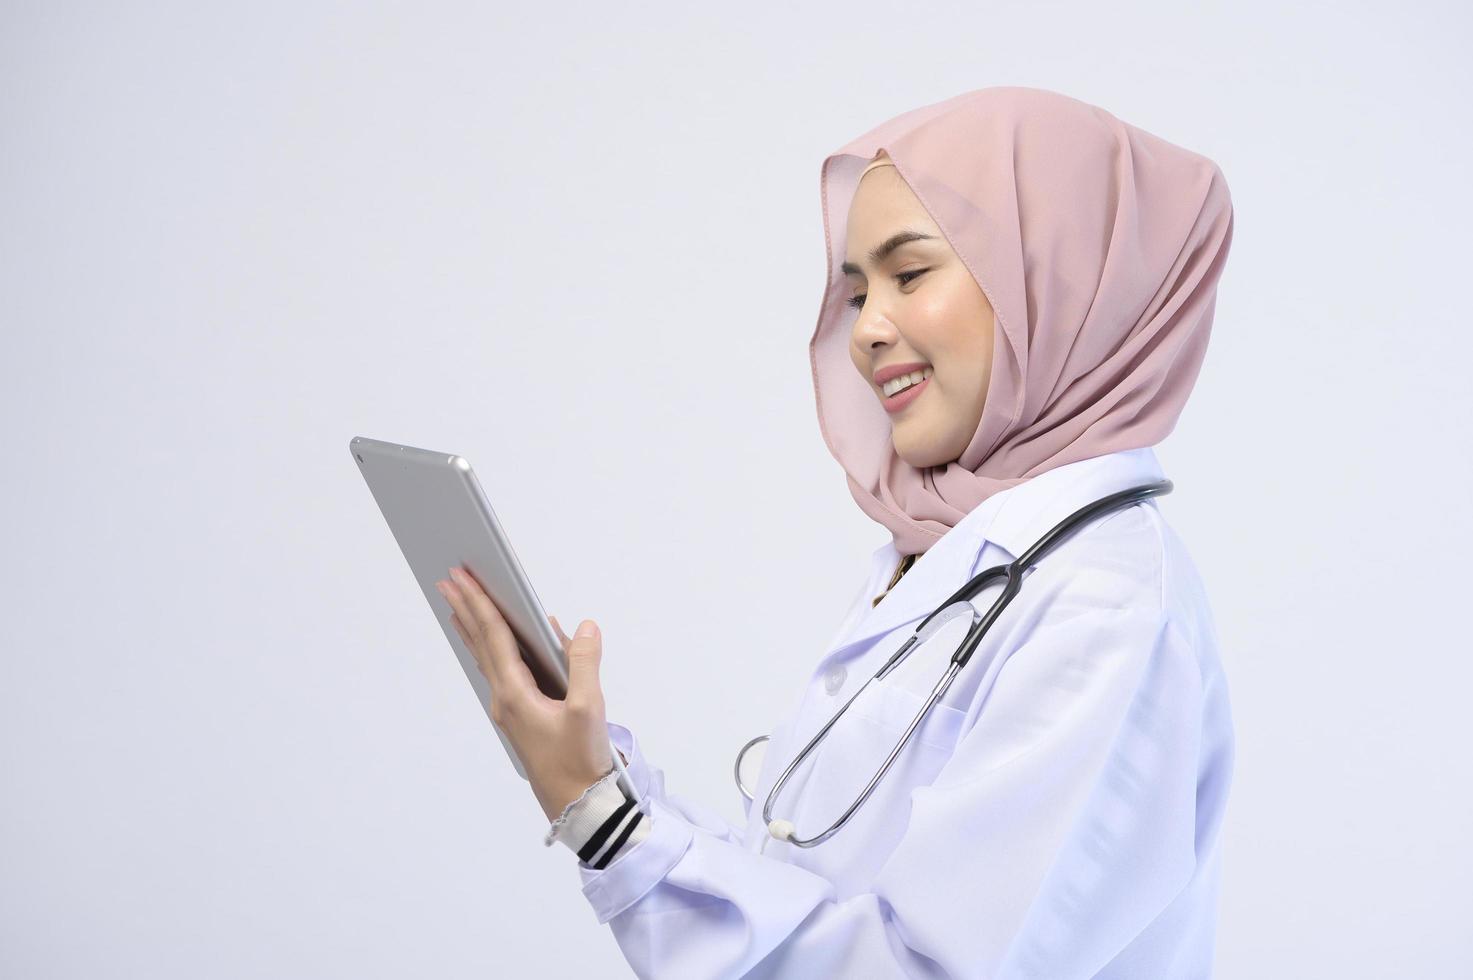 femme médecin musulmane avec hijab sur fond blanc studio. photo